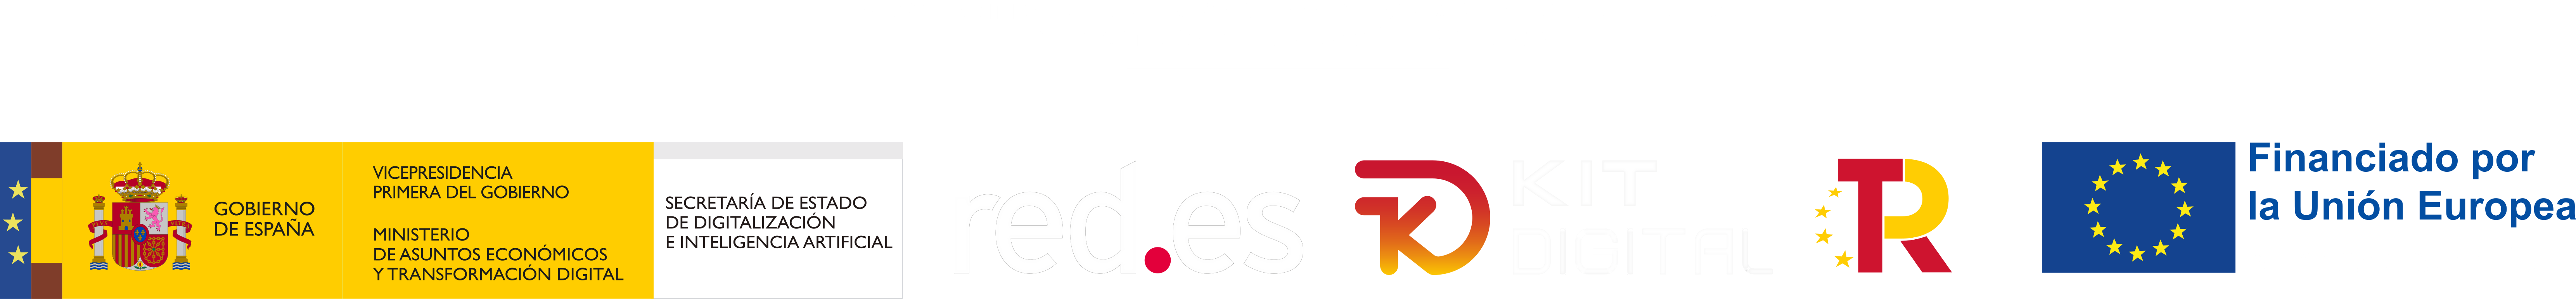 dafy_agencia_Kit_Digital_Madrid_Logo-digitalizadores--blanco